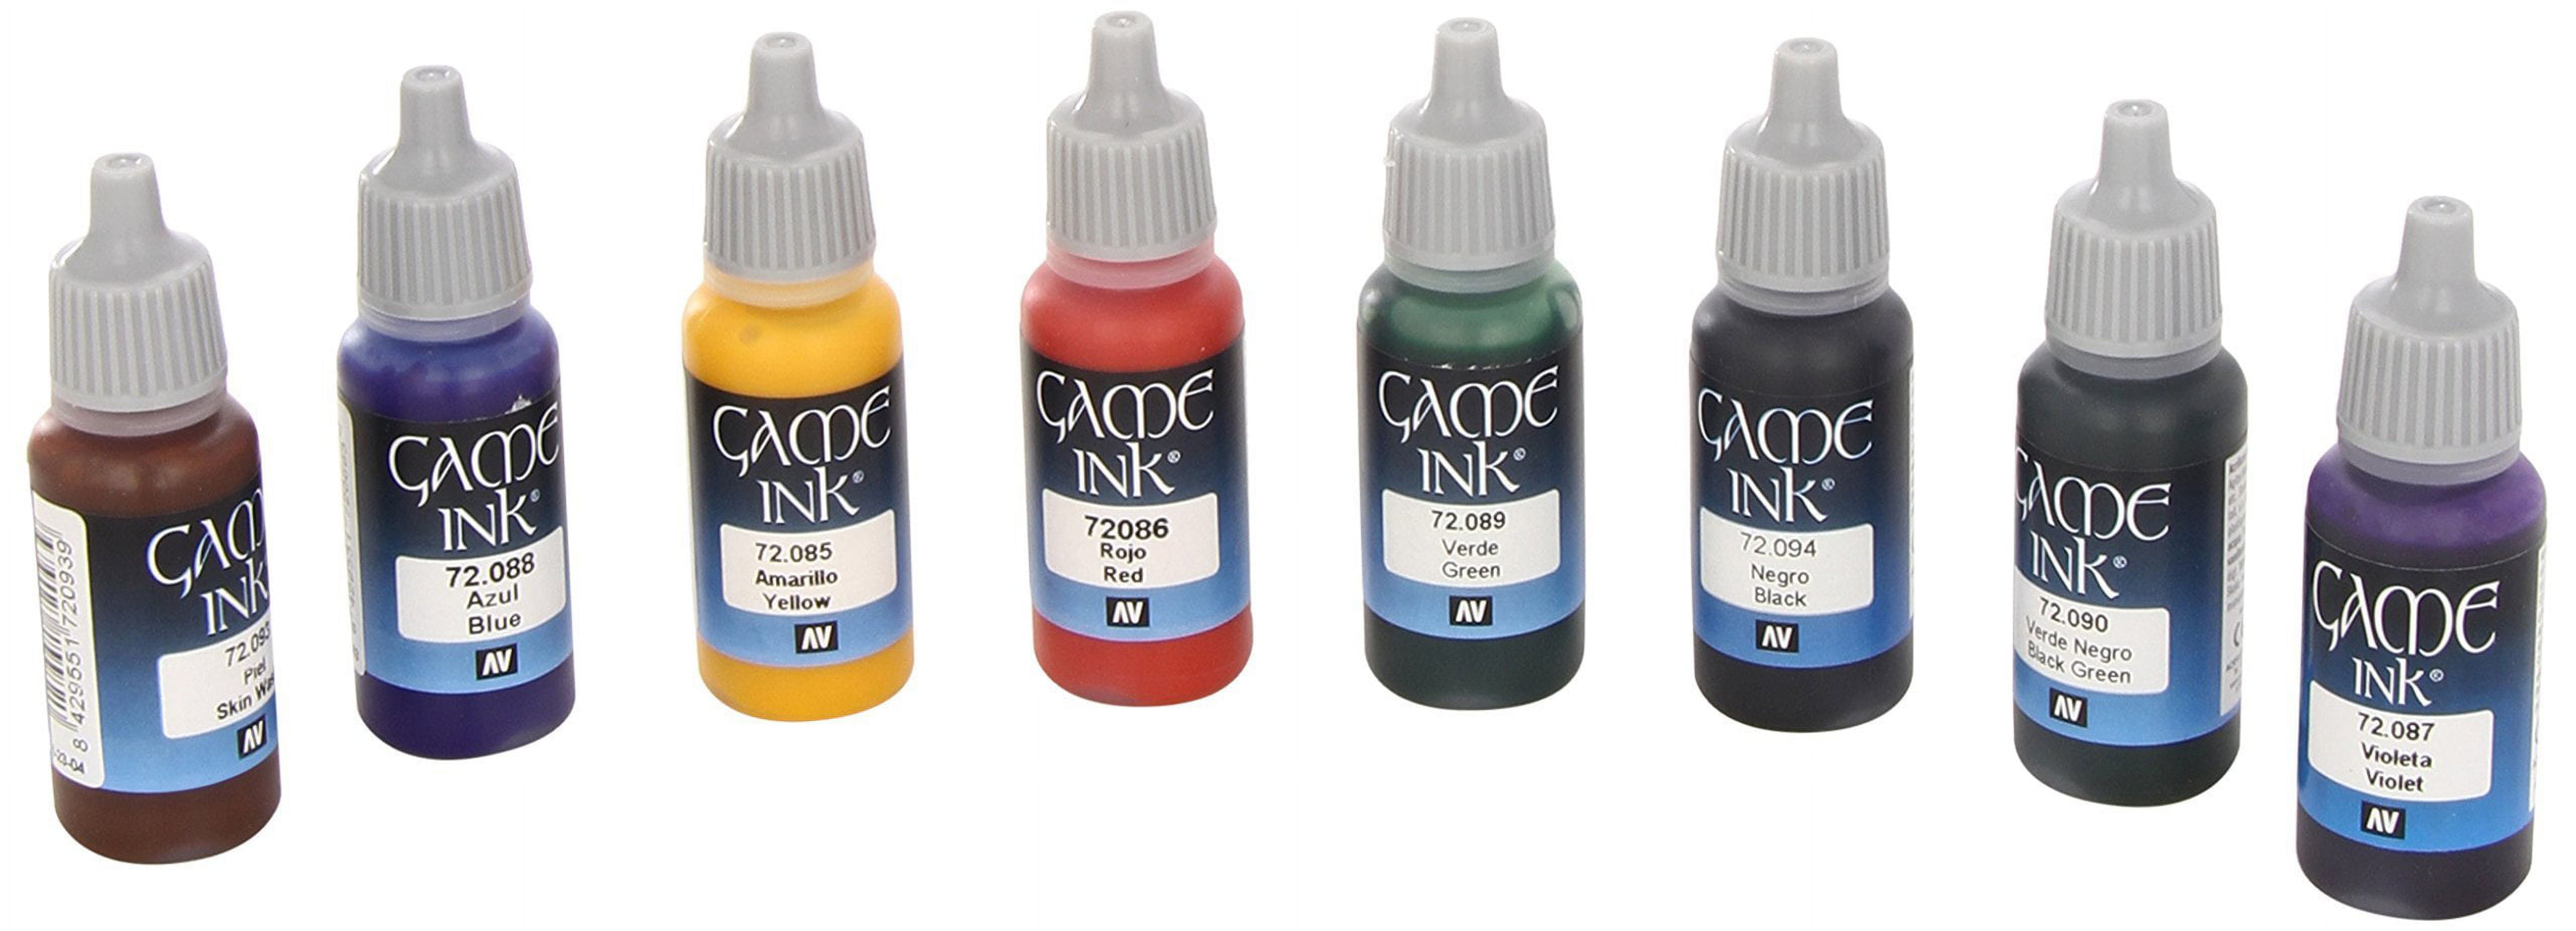 Game Color: Inks Set (8)